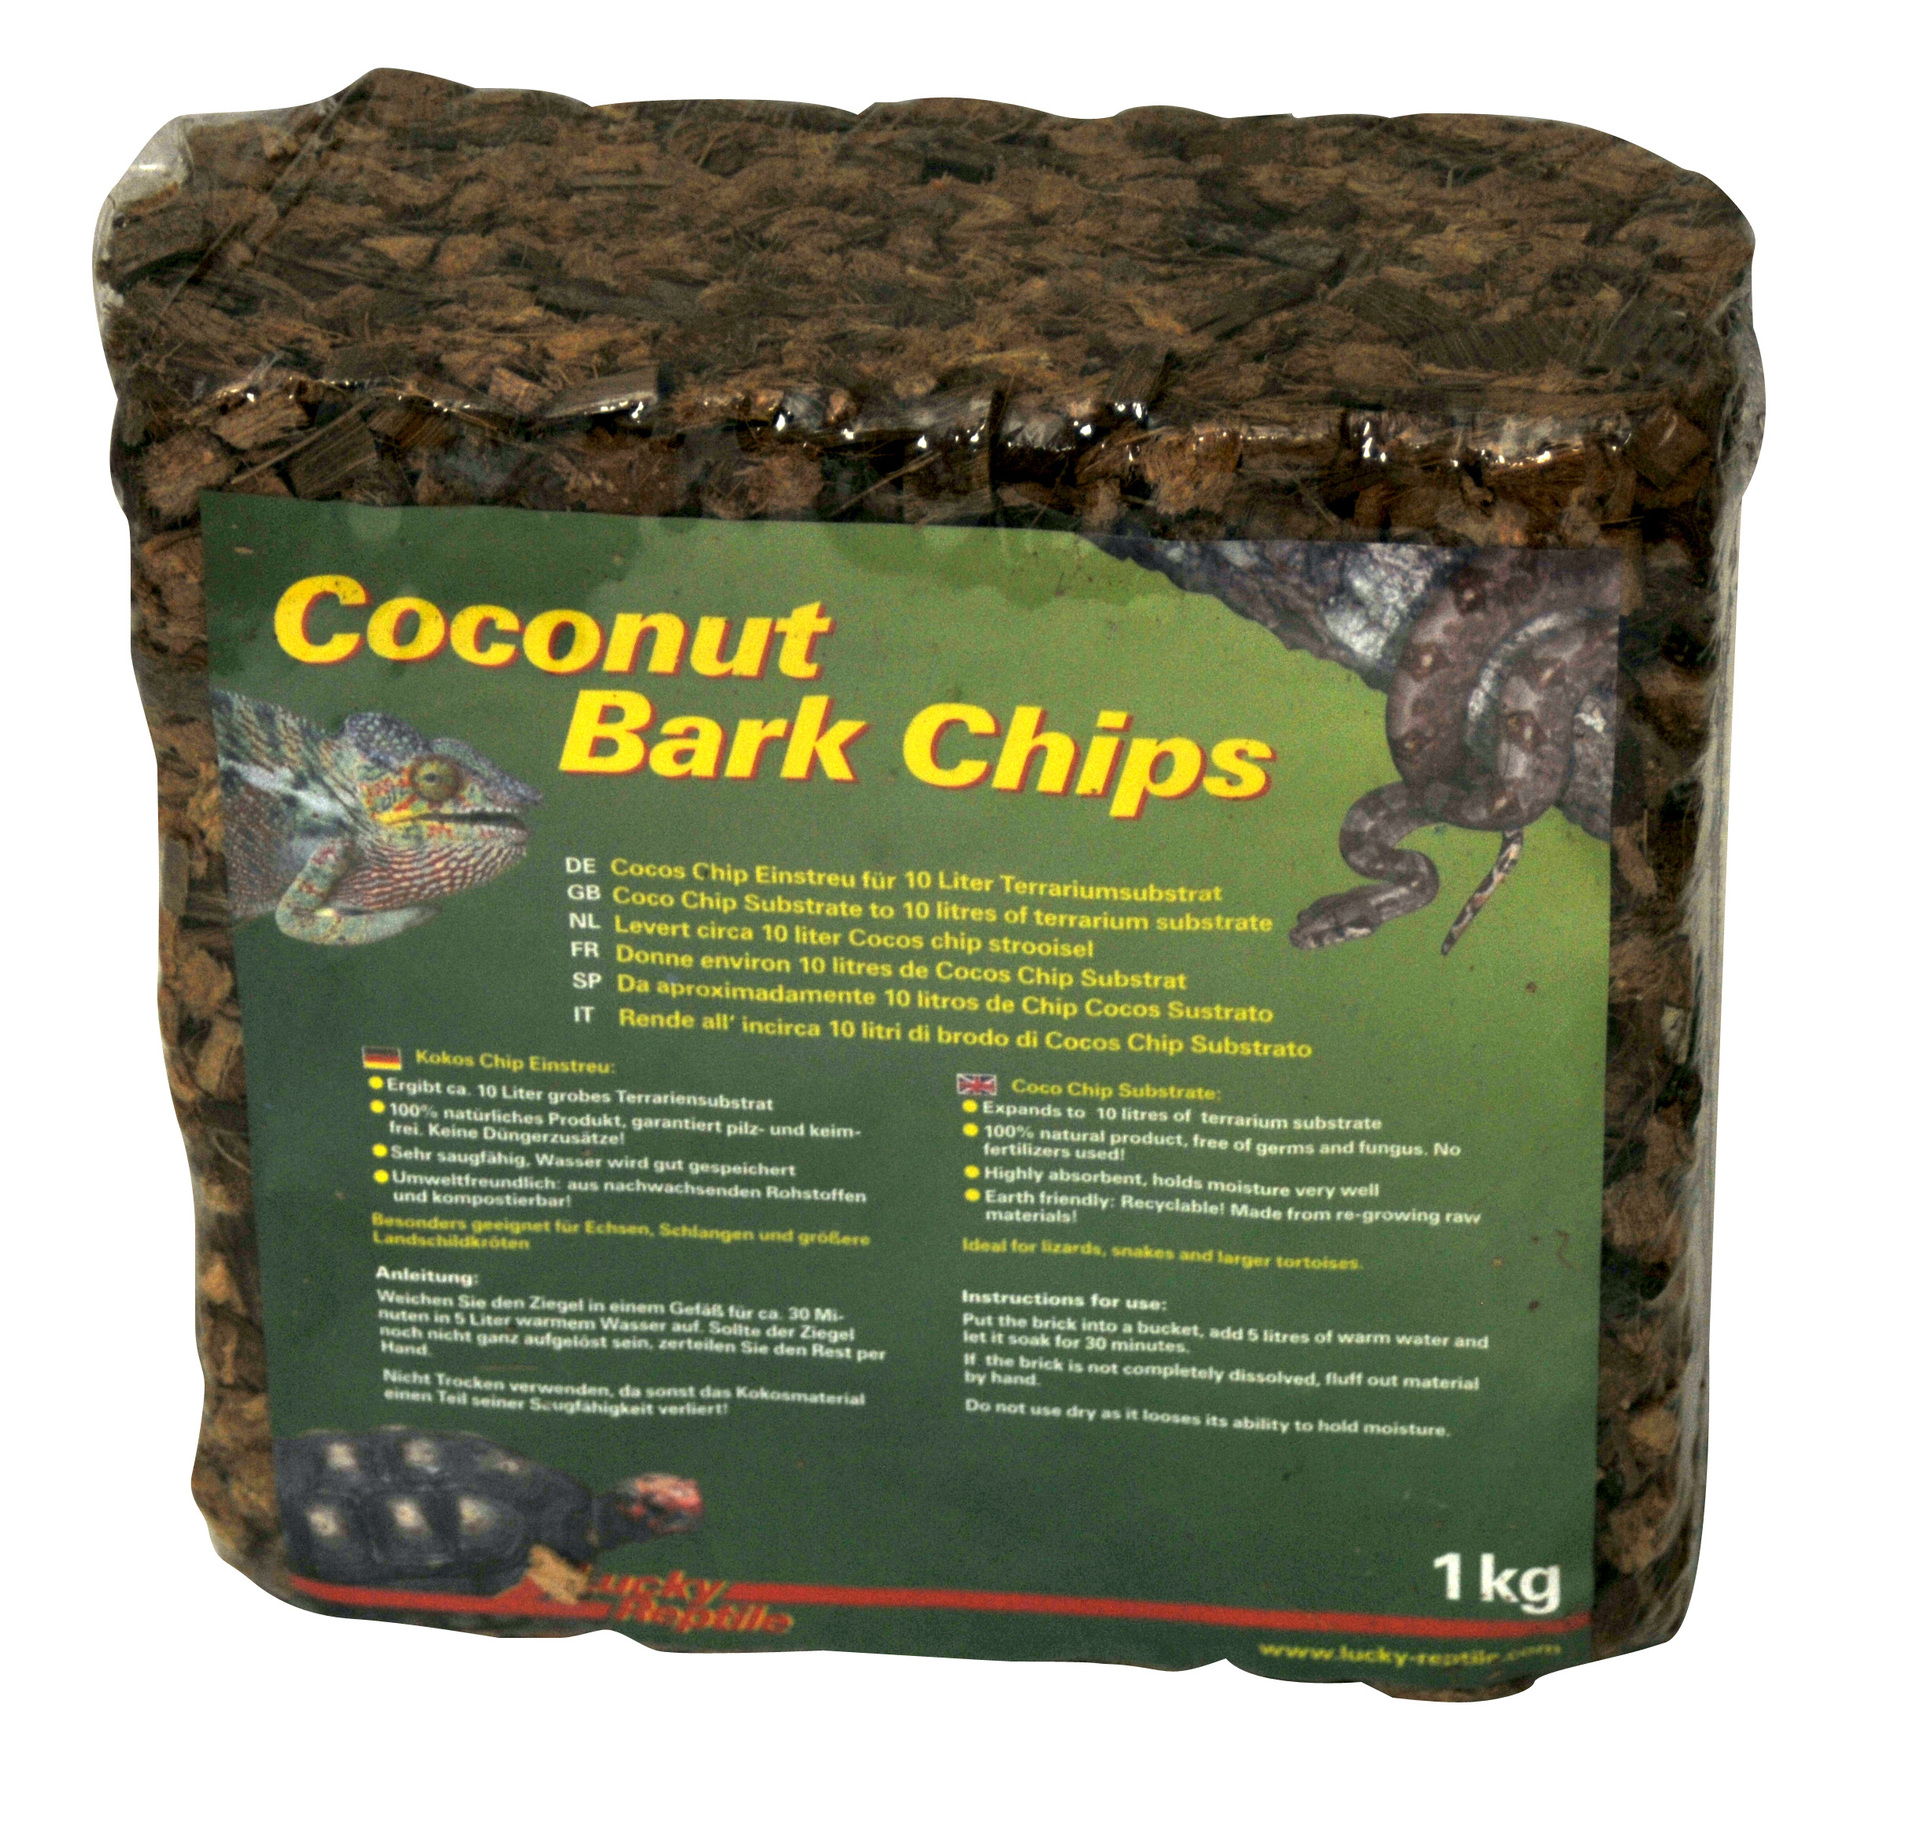 Import-Export Peter Hoch GmbH Coconut Bark Chips 1 kg